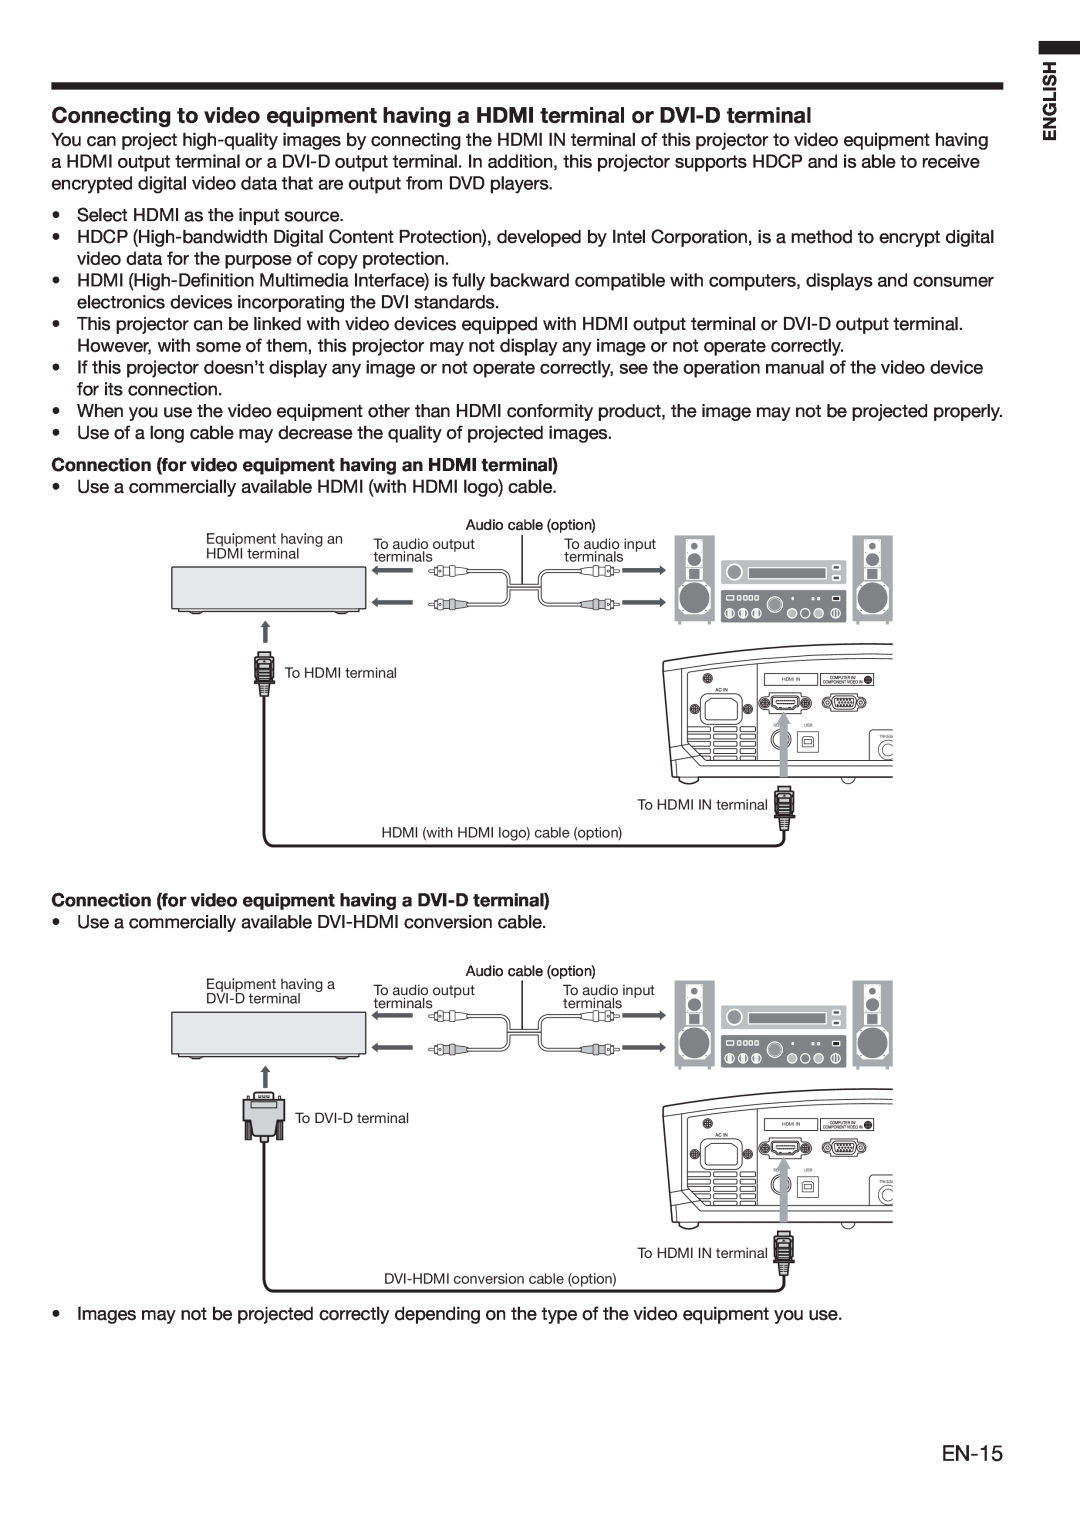 Mitsubishi Electronics HC3100 user manual EN-15, Connection for video equipment having an HDMI terminal, English 